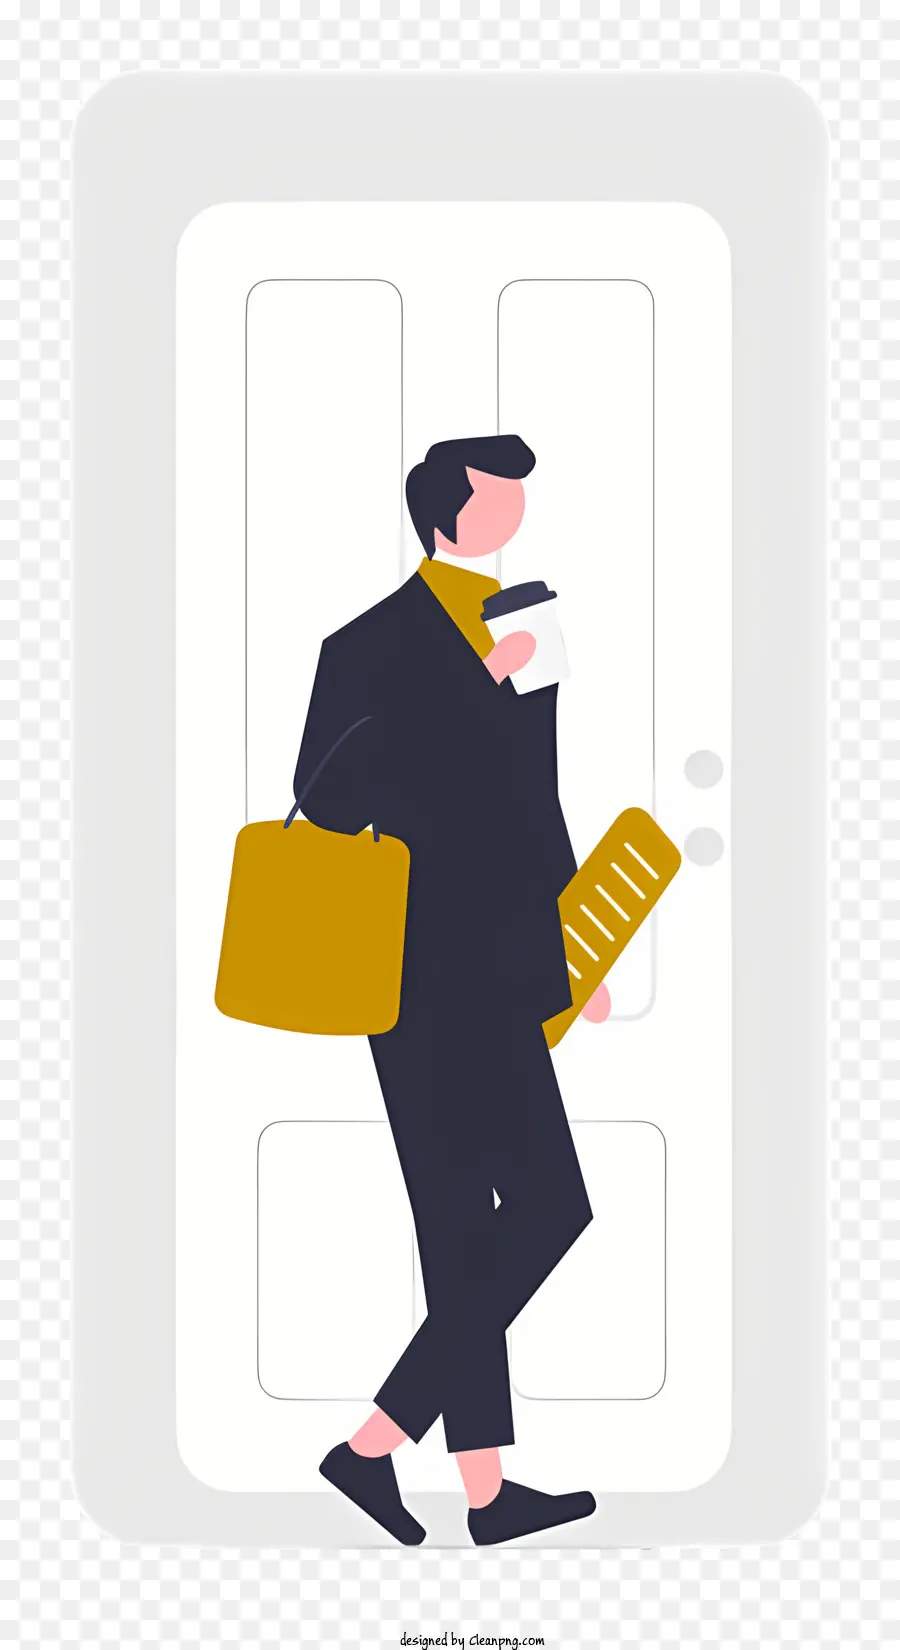 business professional office entrance man in suit business attire confident body language